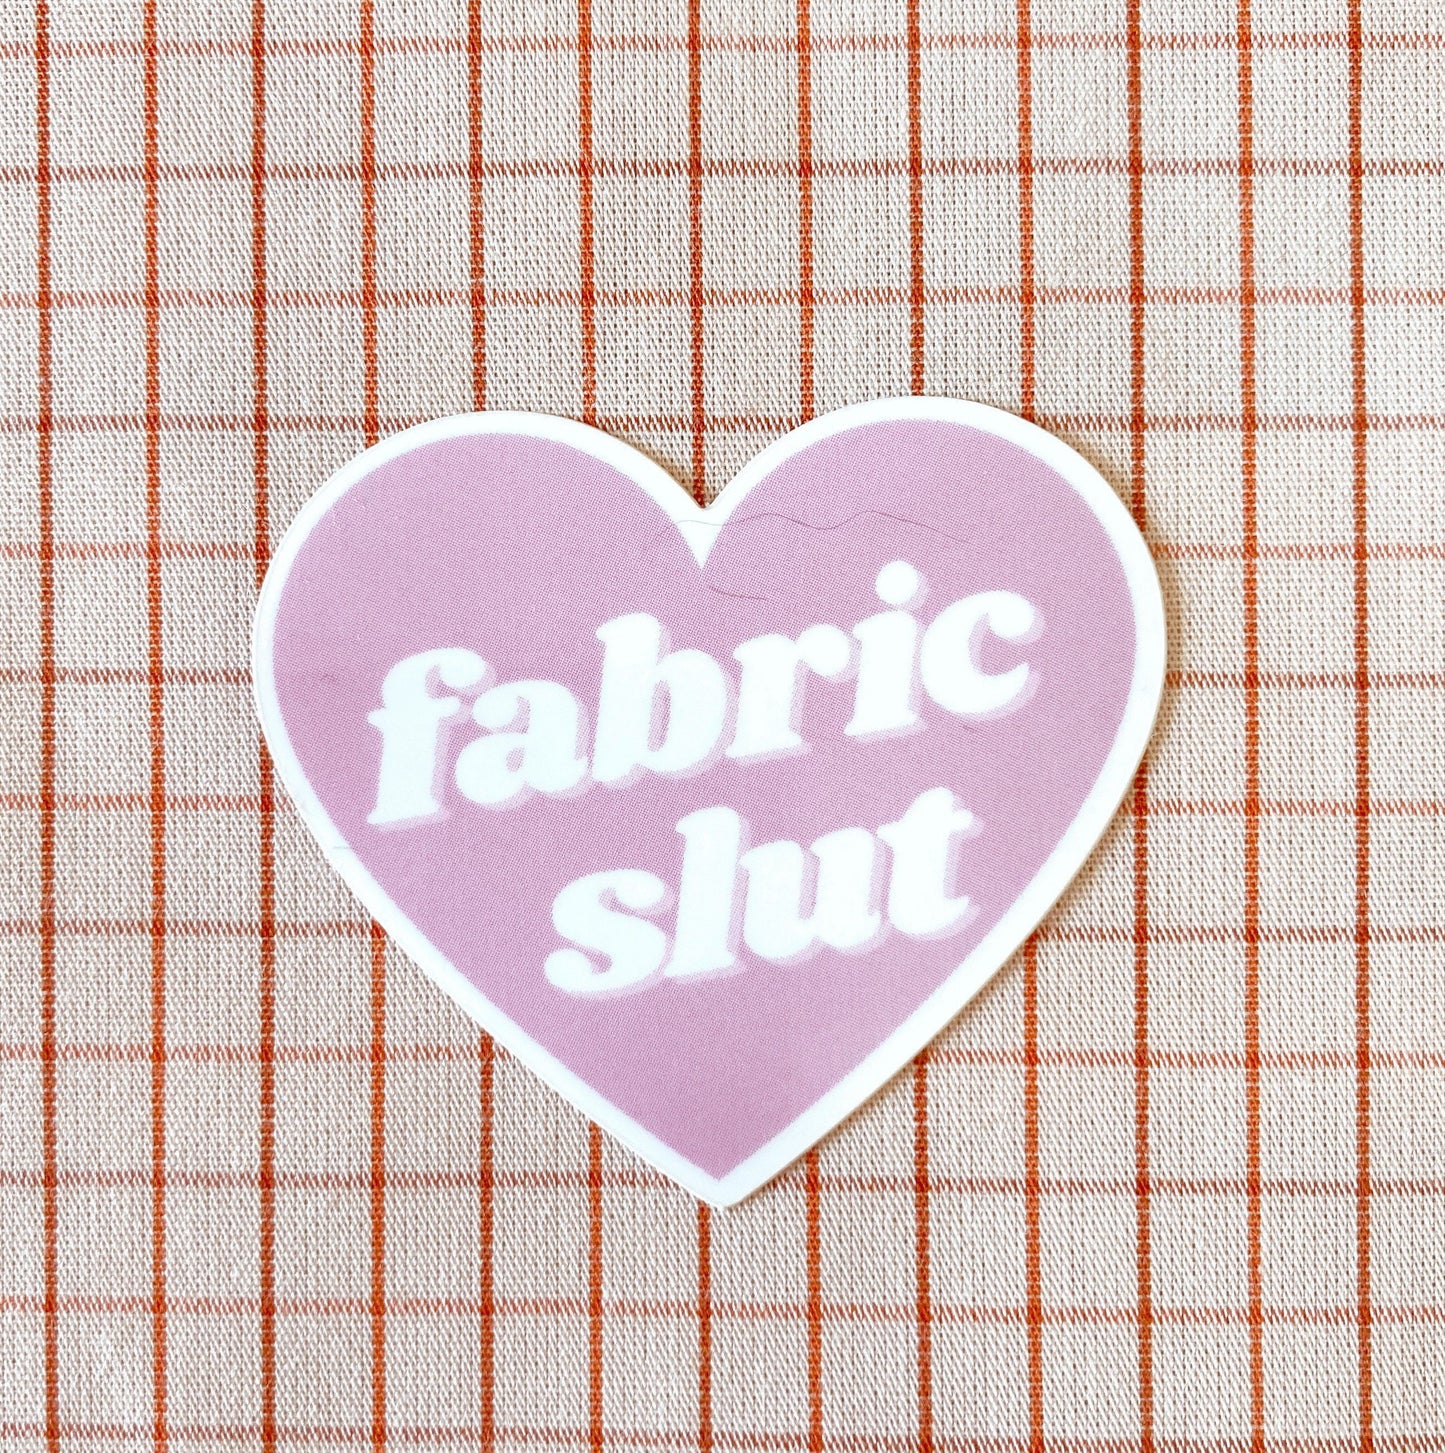 Fabric Slut vinyl sewing sticker